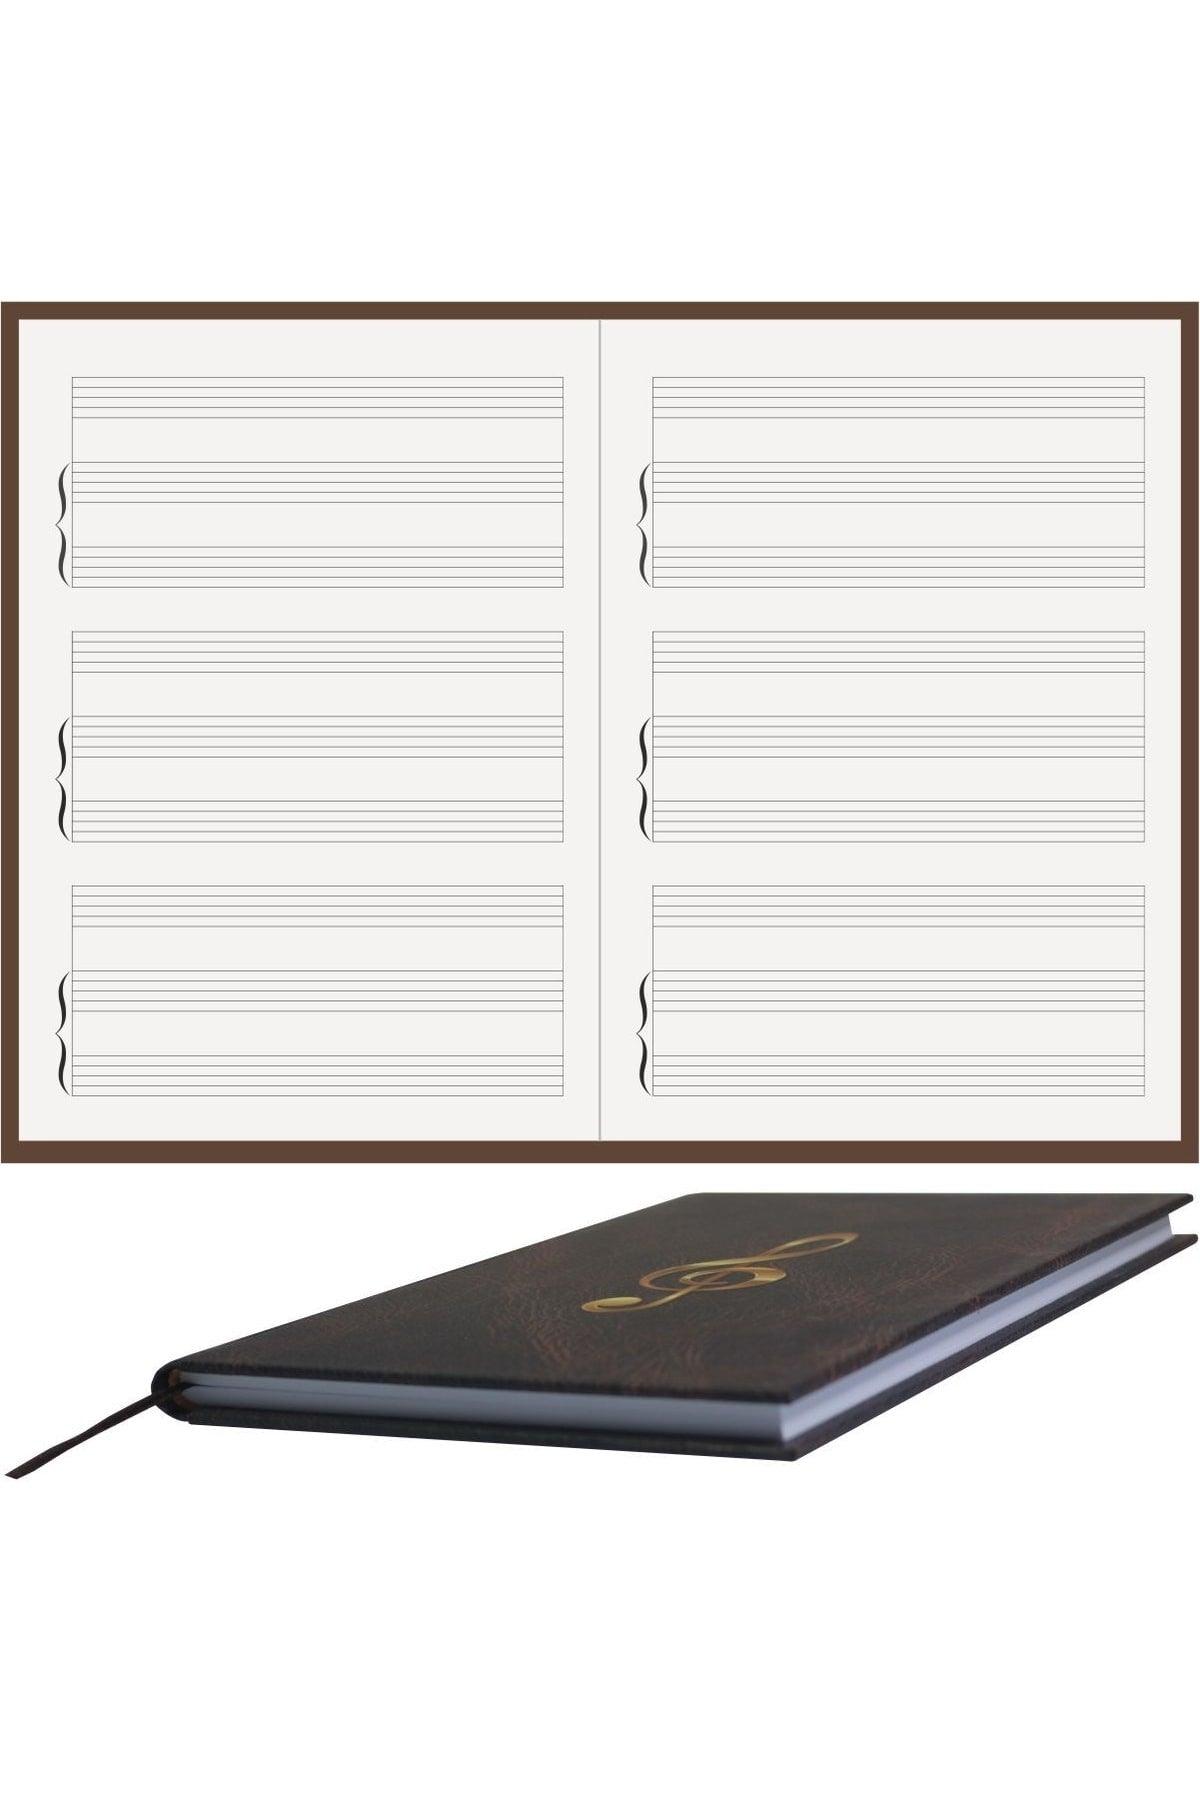 Piano Notebook (Keyless Tab Three